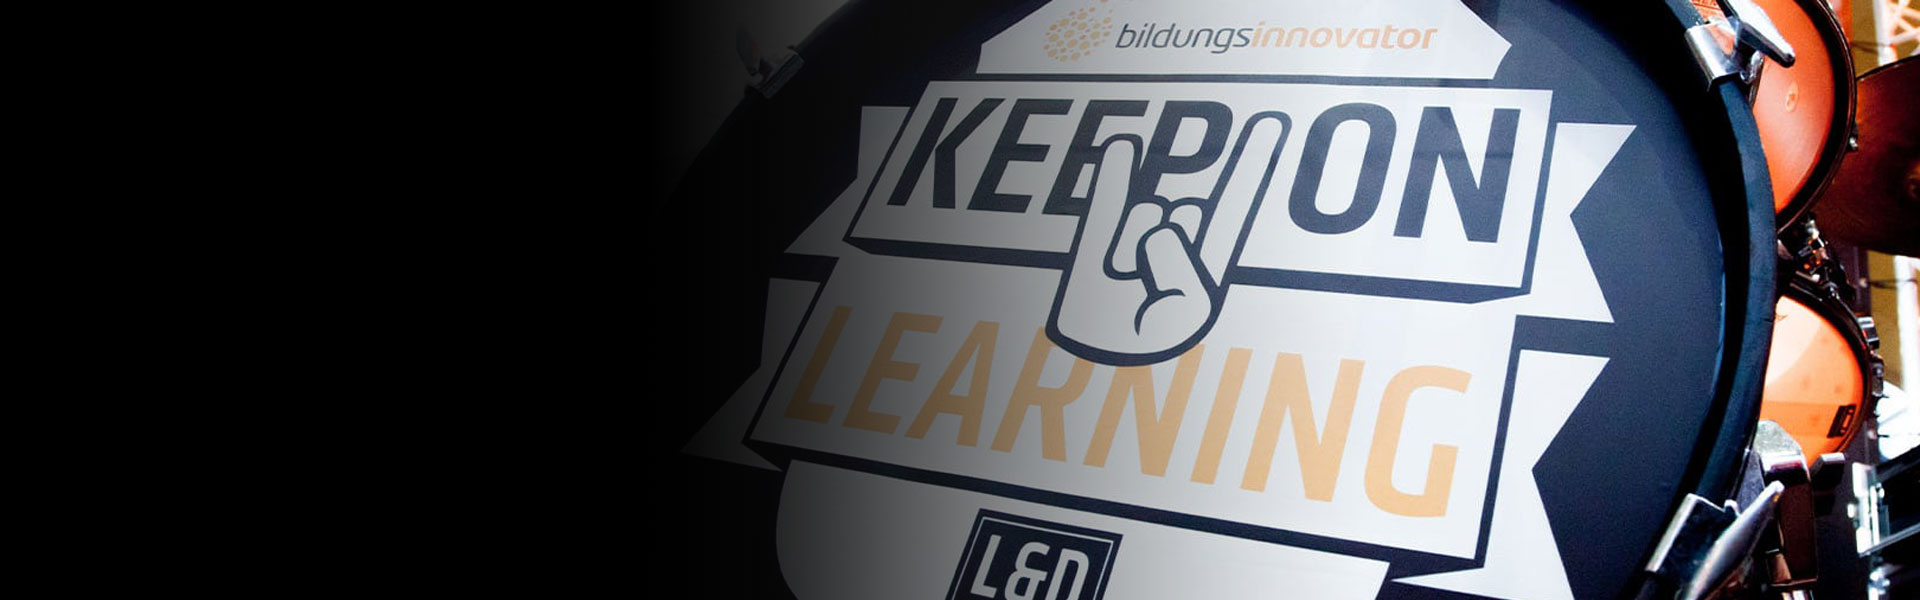 Bildungsinnovator – Keep on Learning